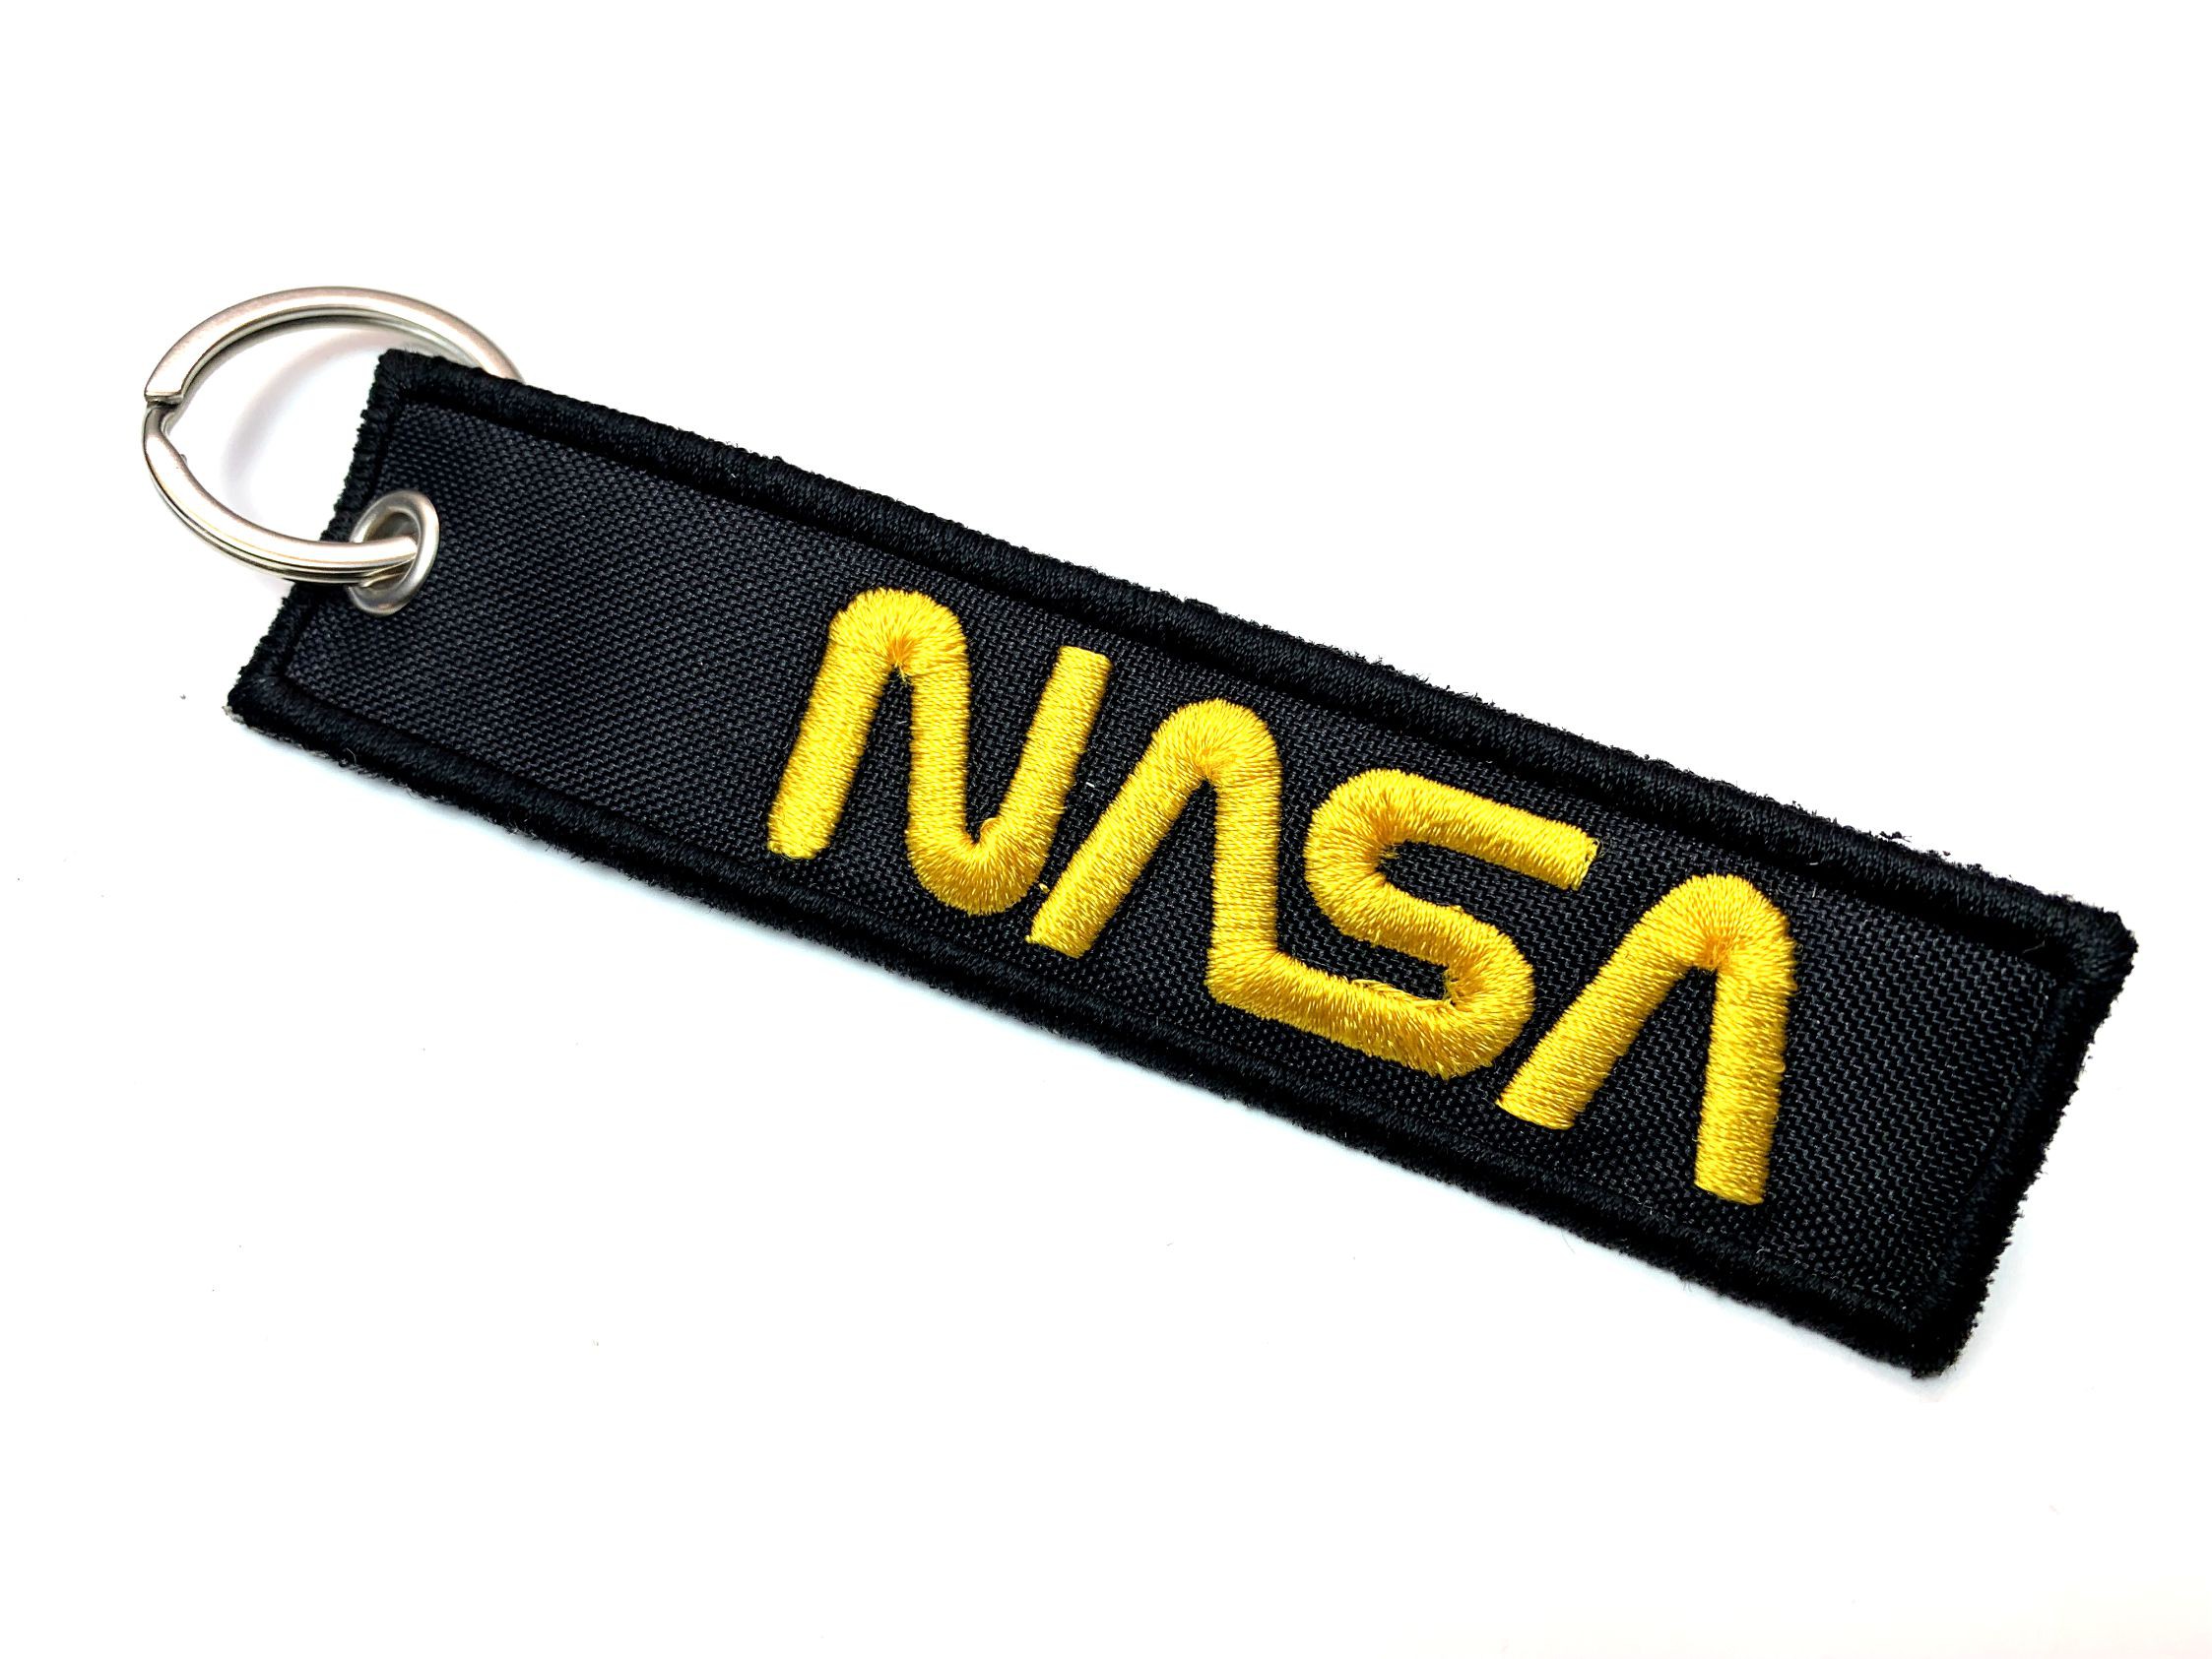 Parche bordado NASA NEGRO 9cm x 3,5cm